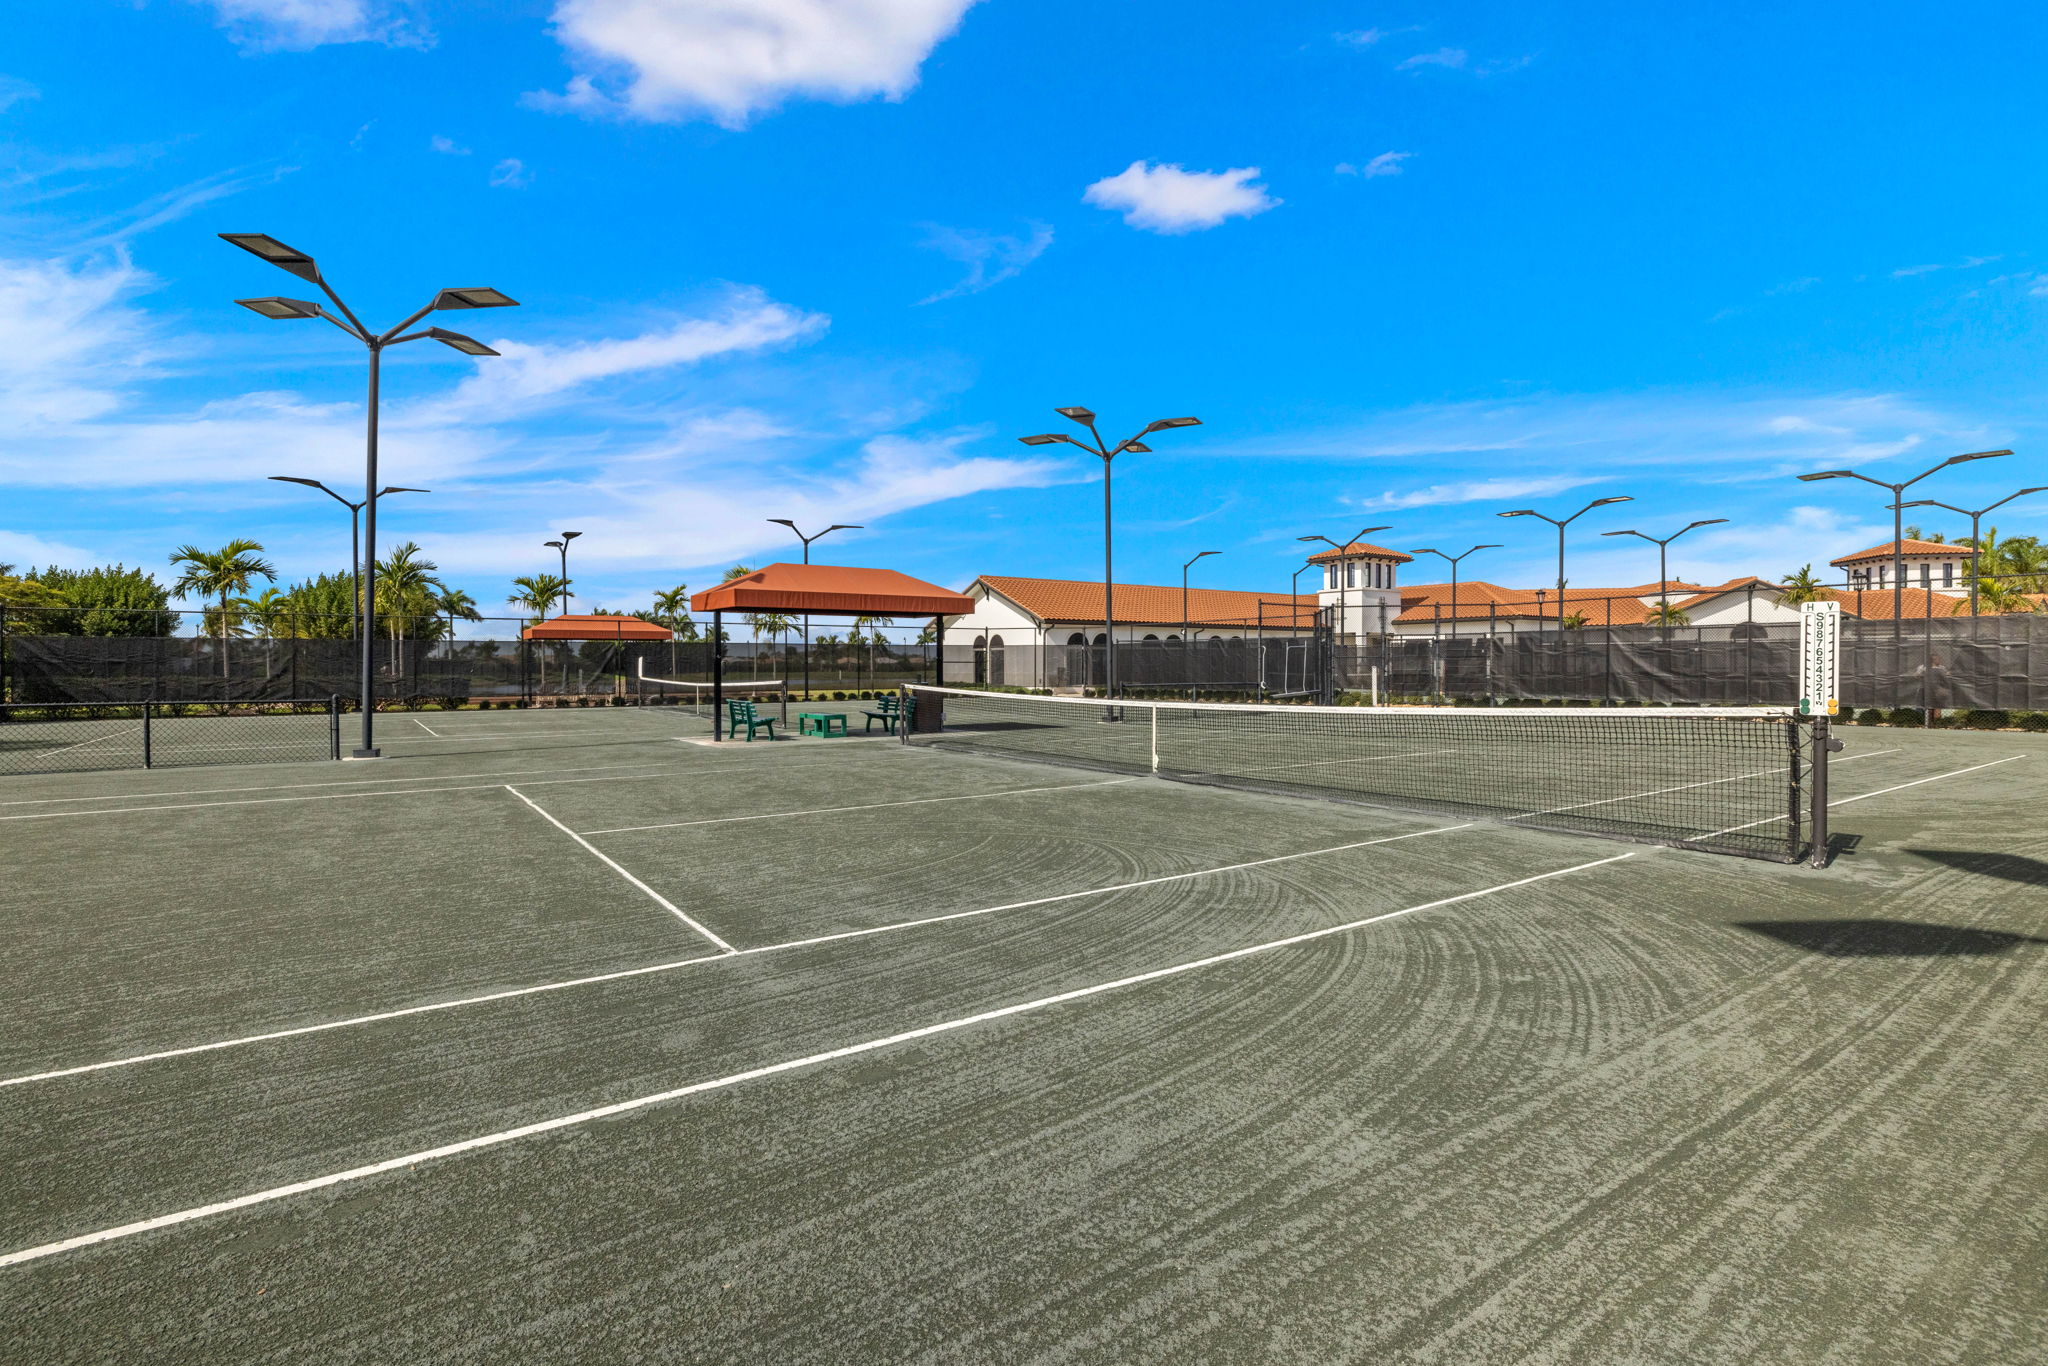 Amenity (5) - Tennis Court